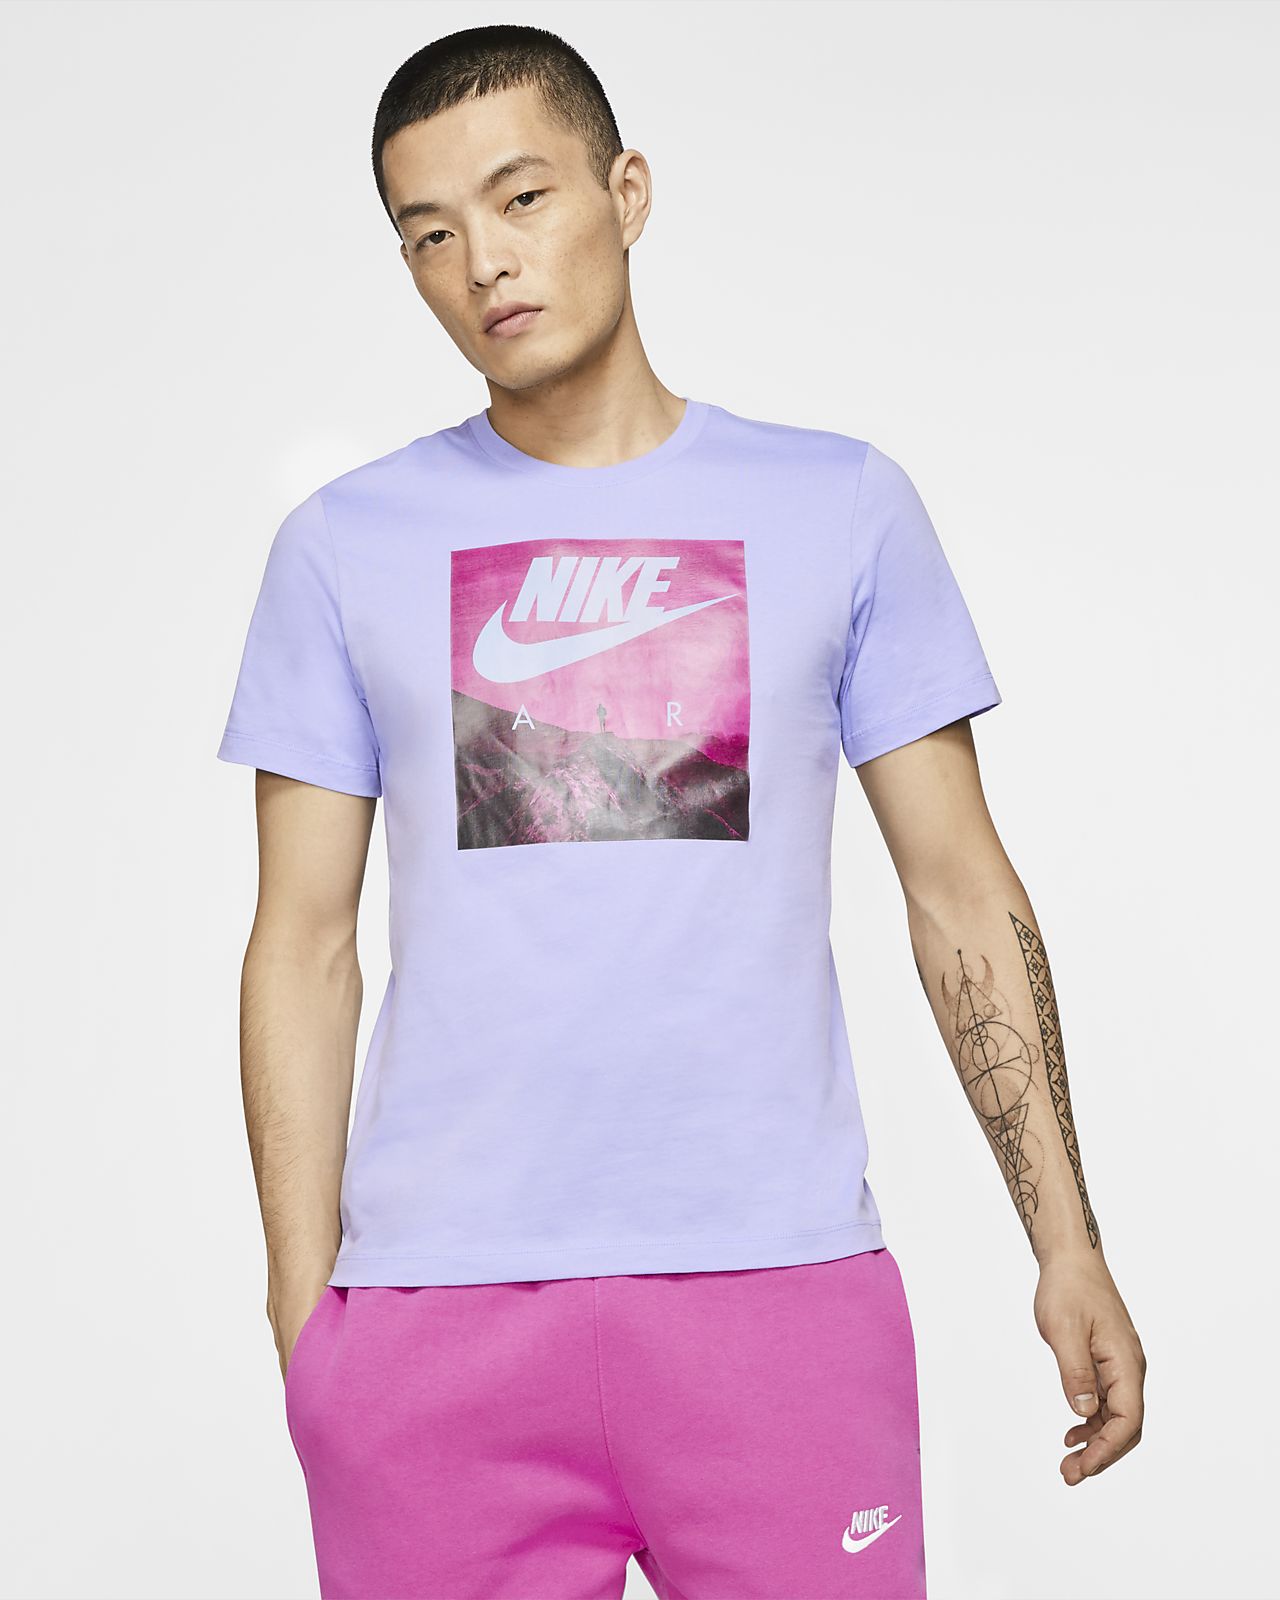 hot pink and purple nike shirt